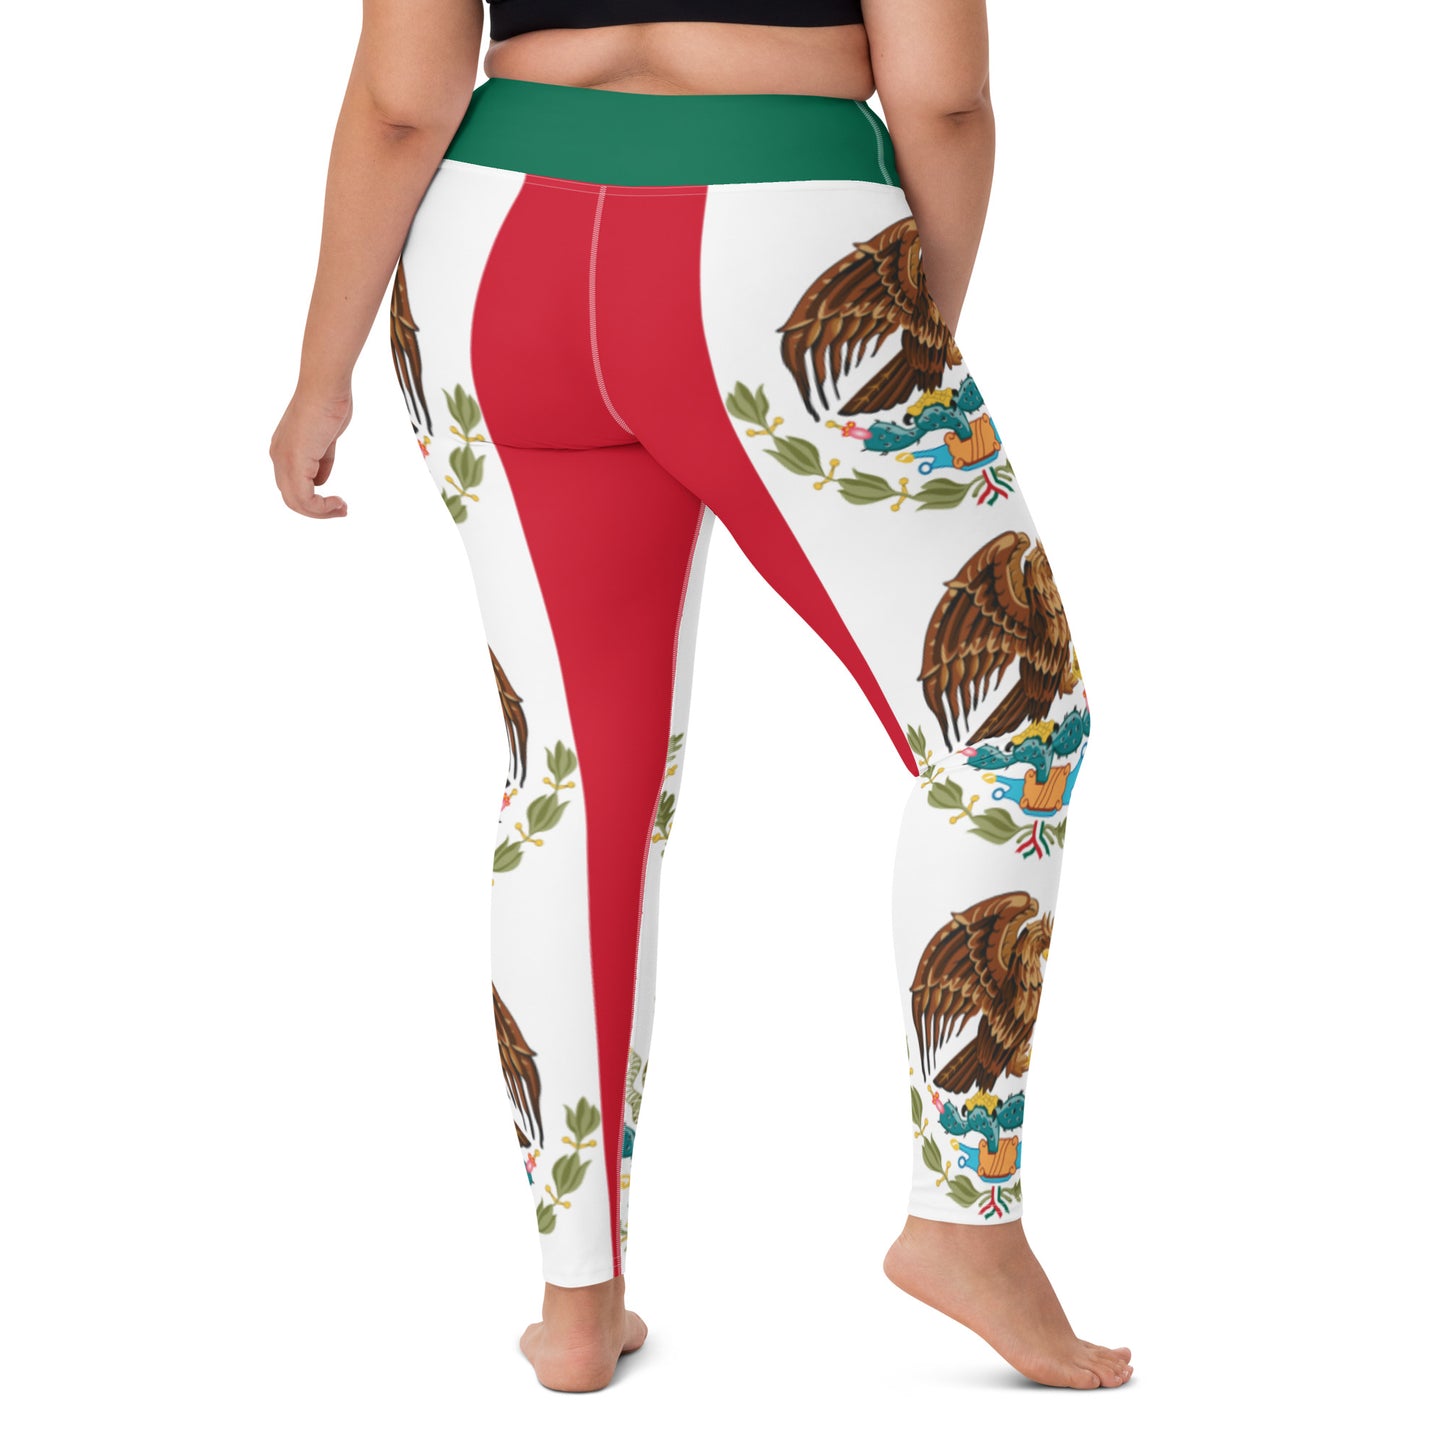 Yoga Leggings Mexico Eagle / Mexican Flag Leggings / Mexican Clothing Style / Inside Pocket